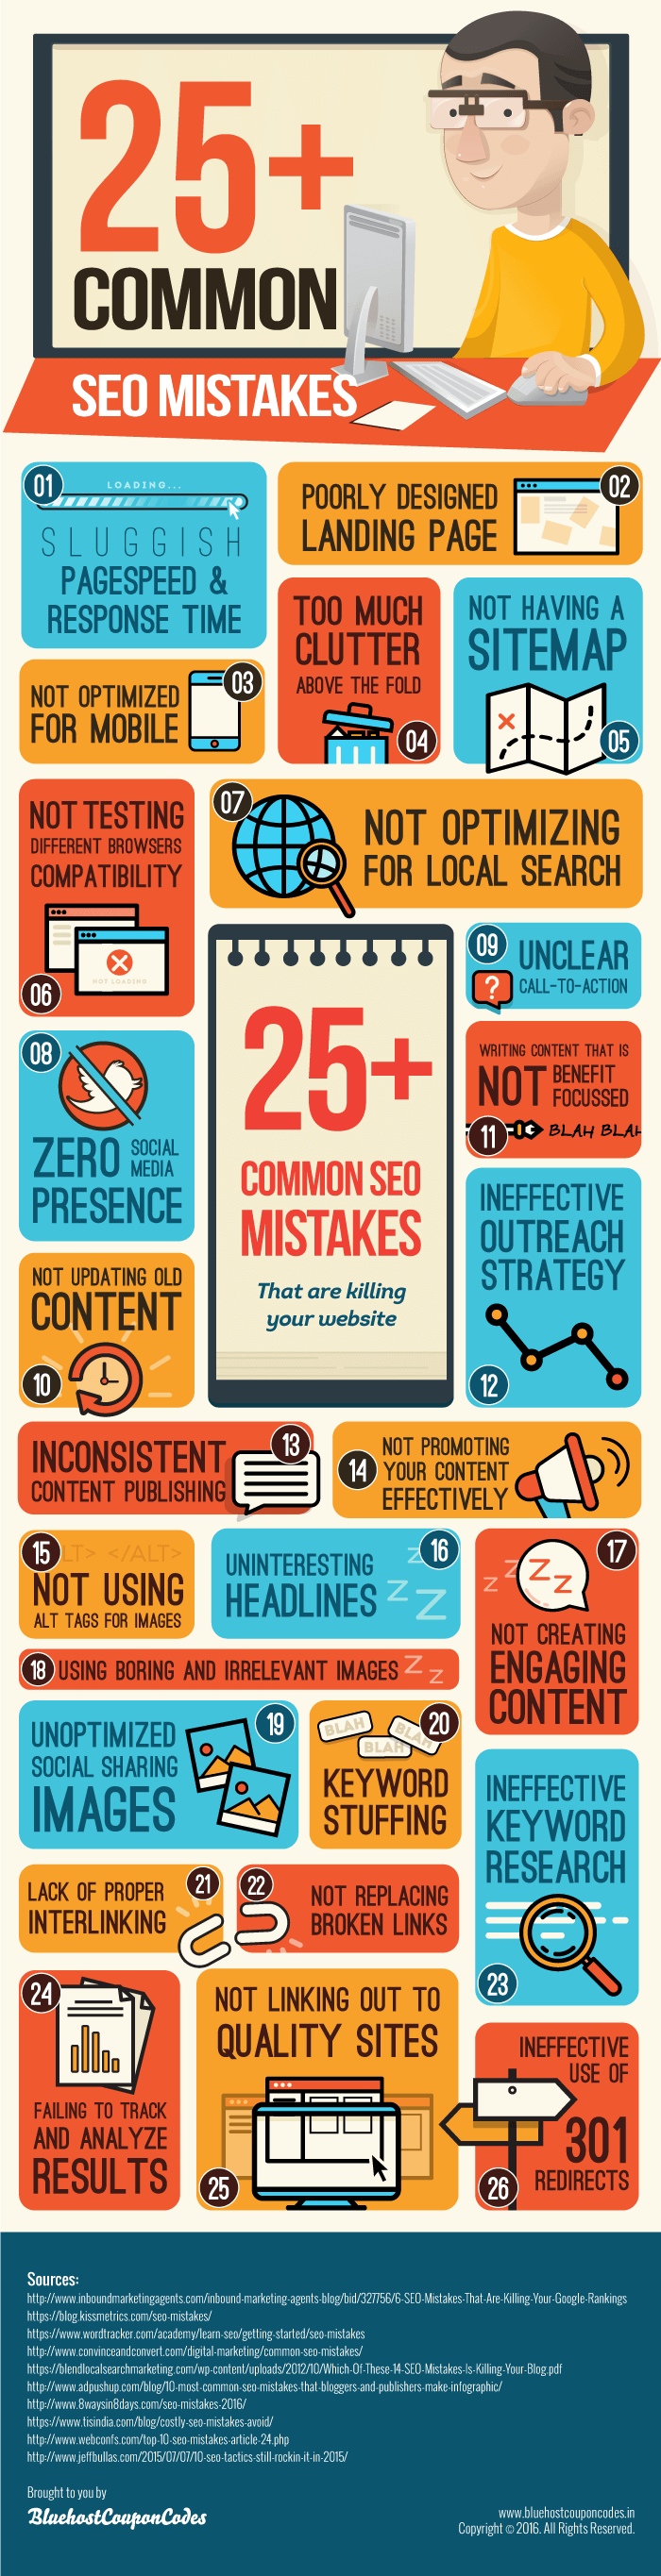 Common Seo Mistakes Infographic